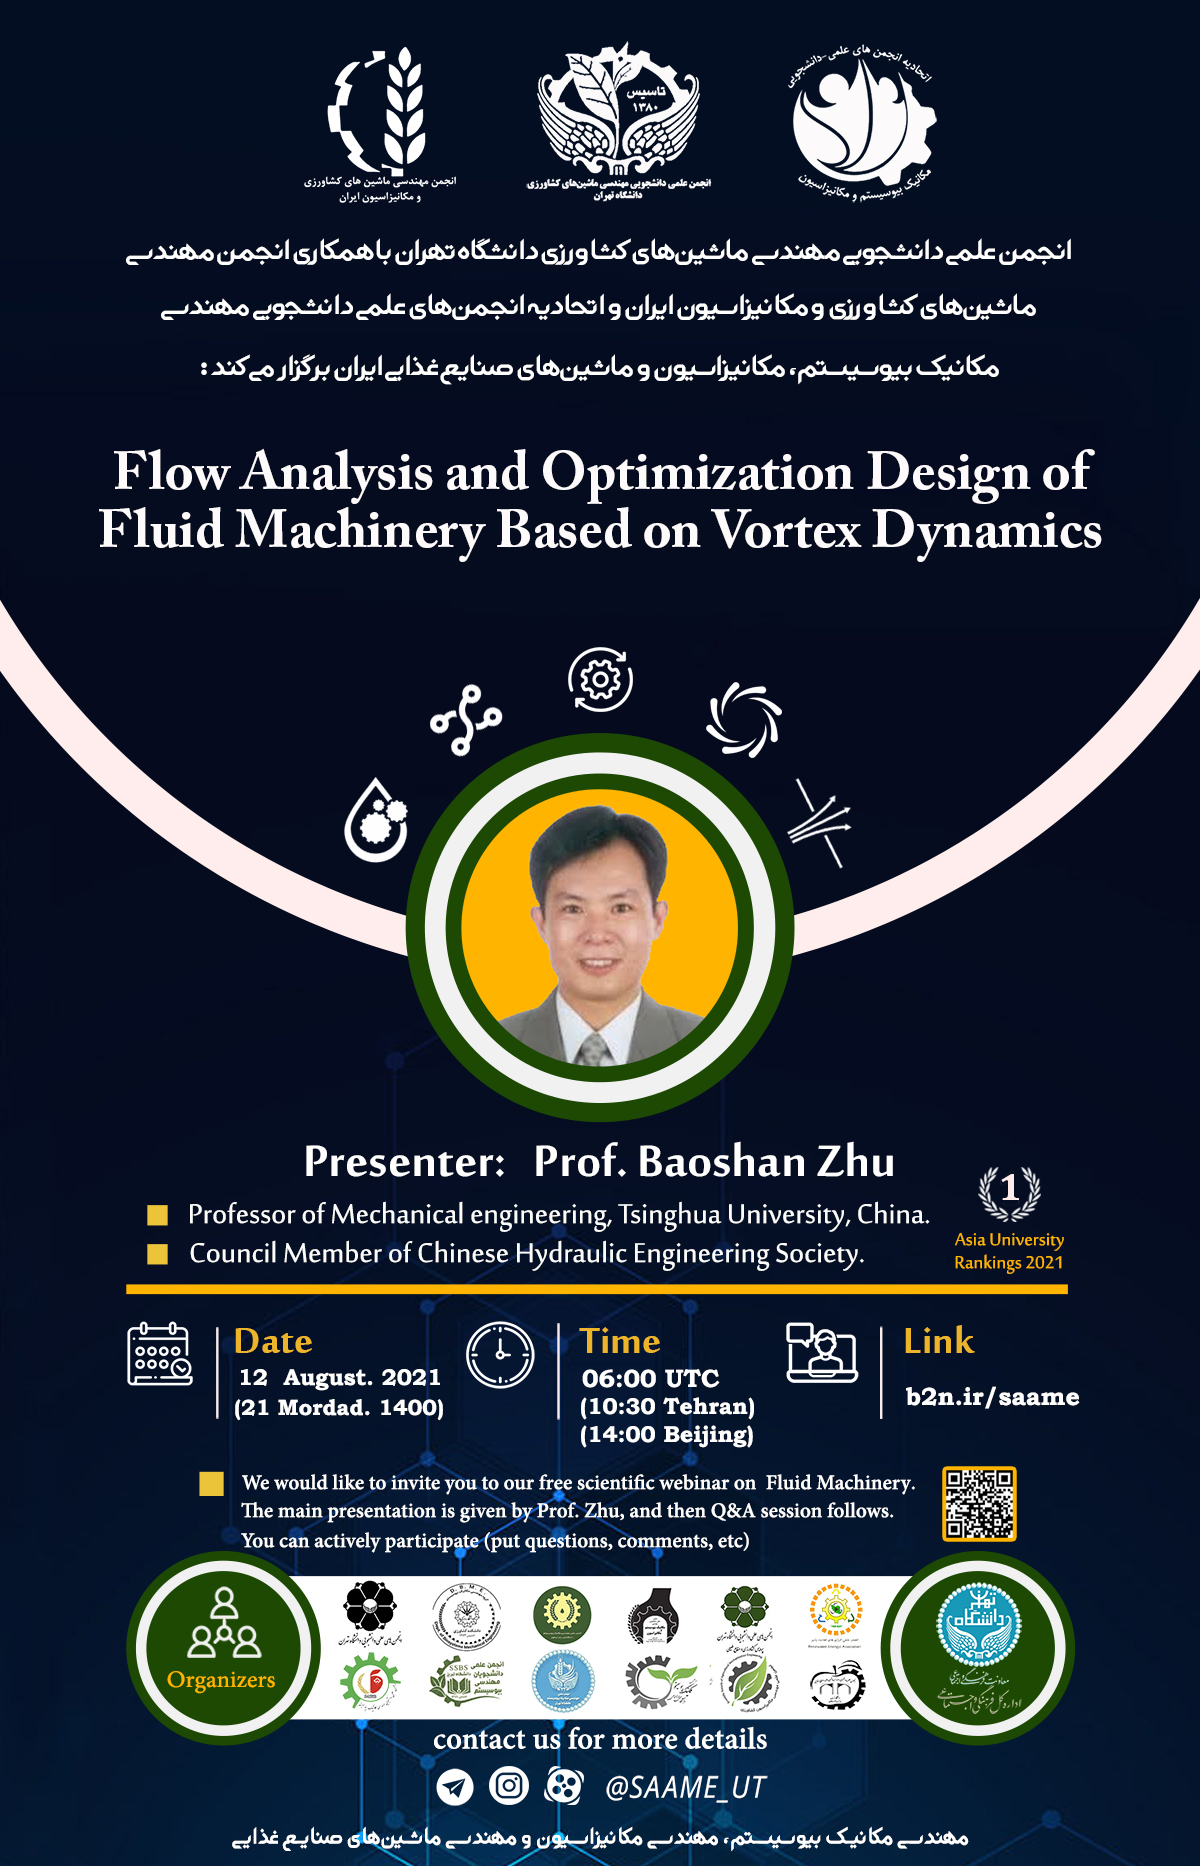 Flow Analysis and Optimization Design of Fluid Machinery Based on Vortex Dynamics, Tehran, Iran